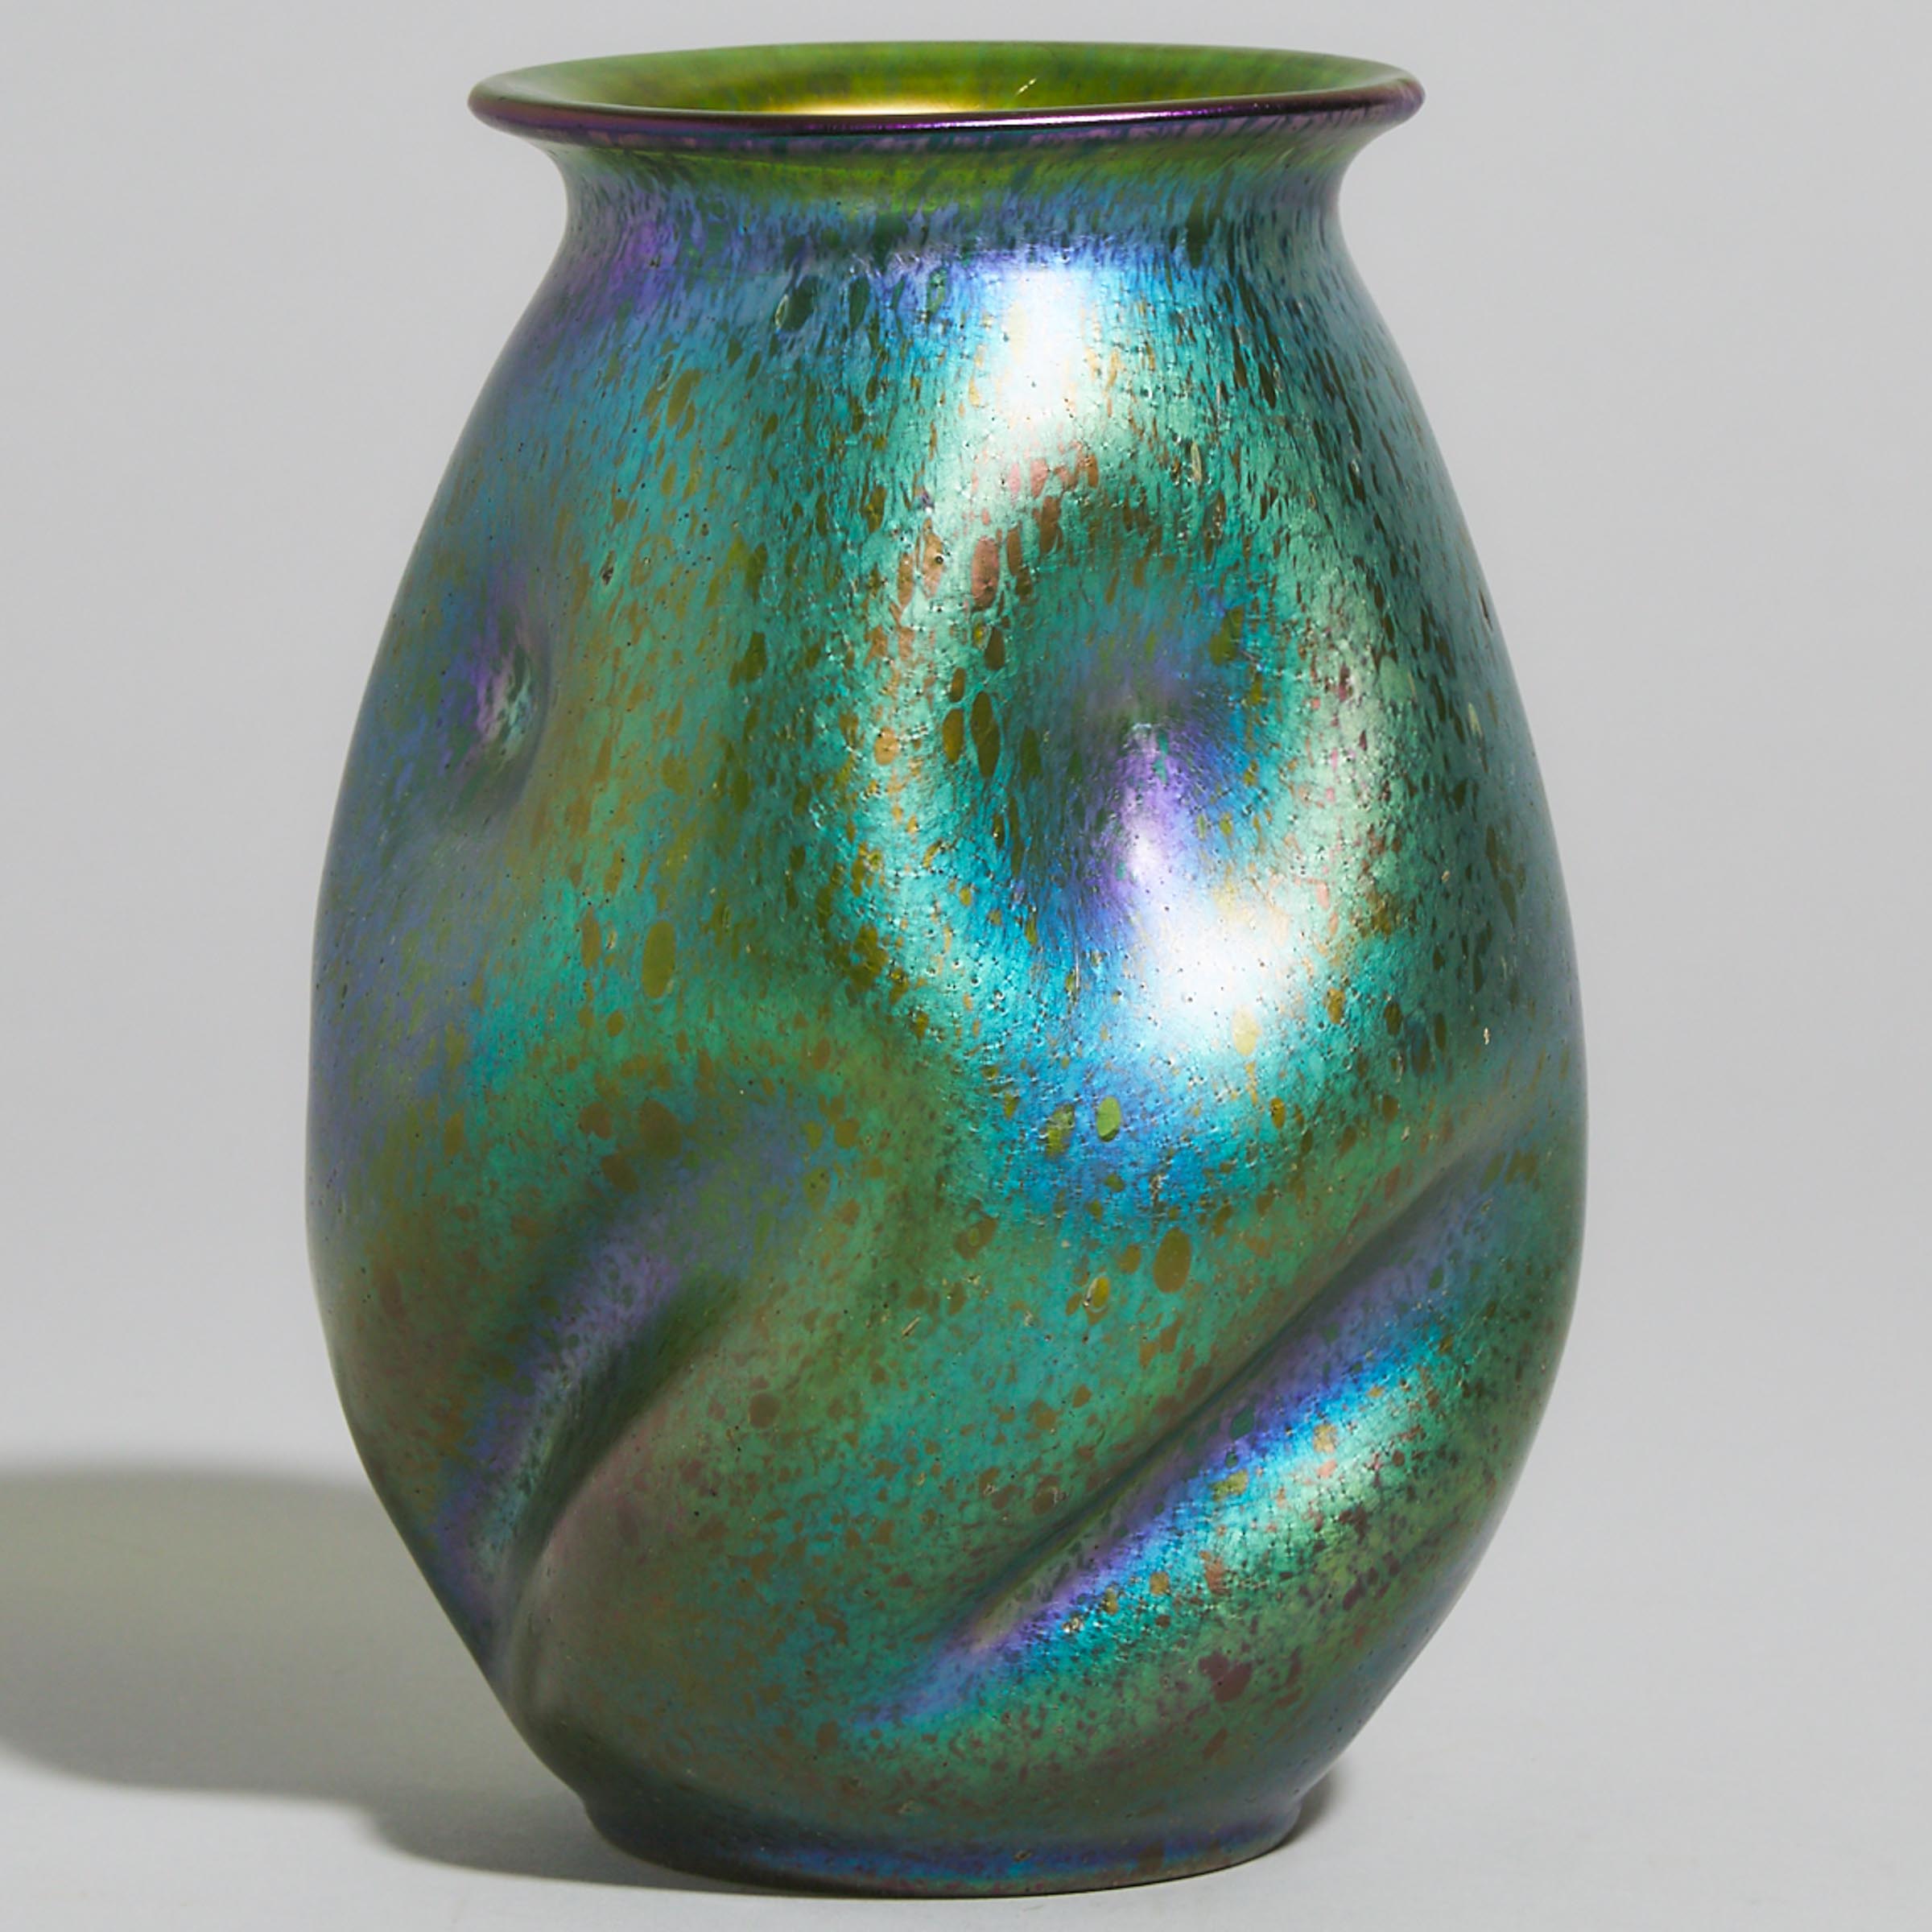 Austrian Iridescent Glass Vase, possibly Loetz, early 20th century